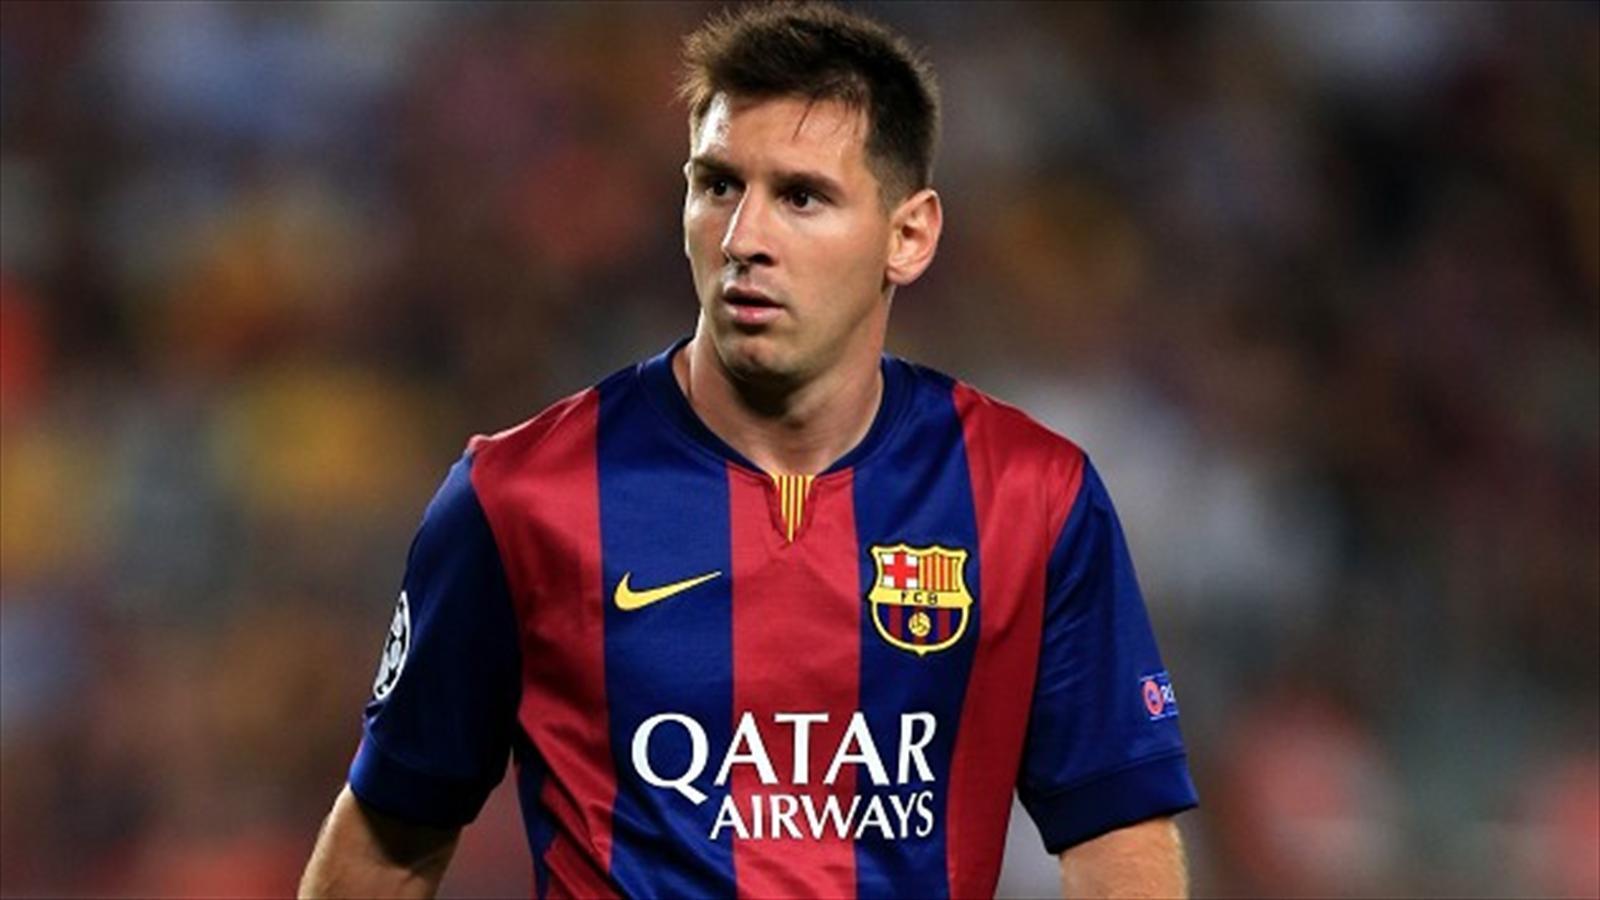 Messi Barcelona 2015 HD Cool 7 HD Wallpaper. F. C. Barcelona